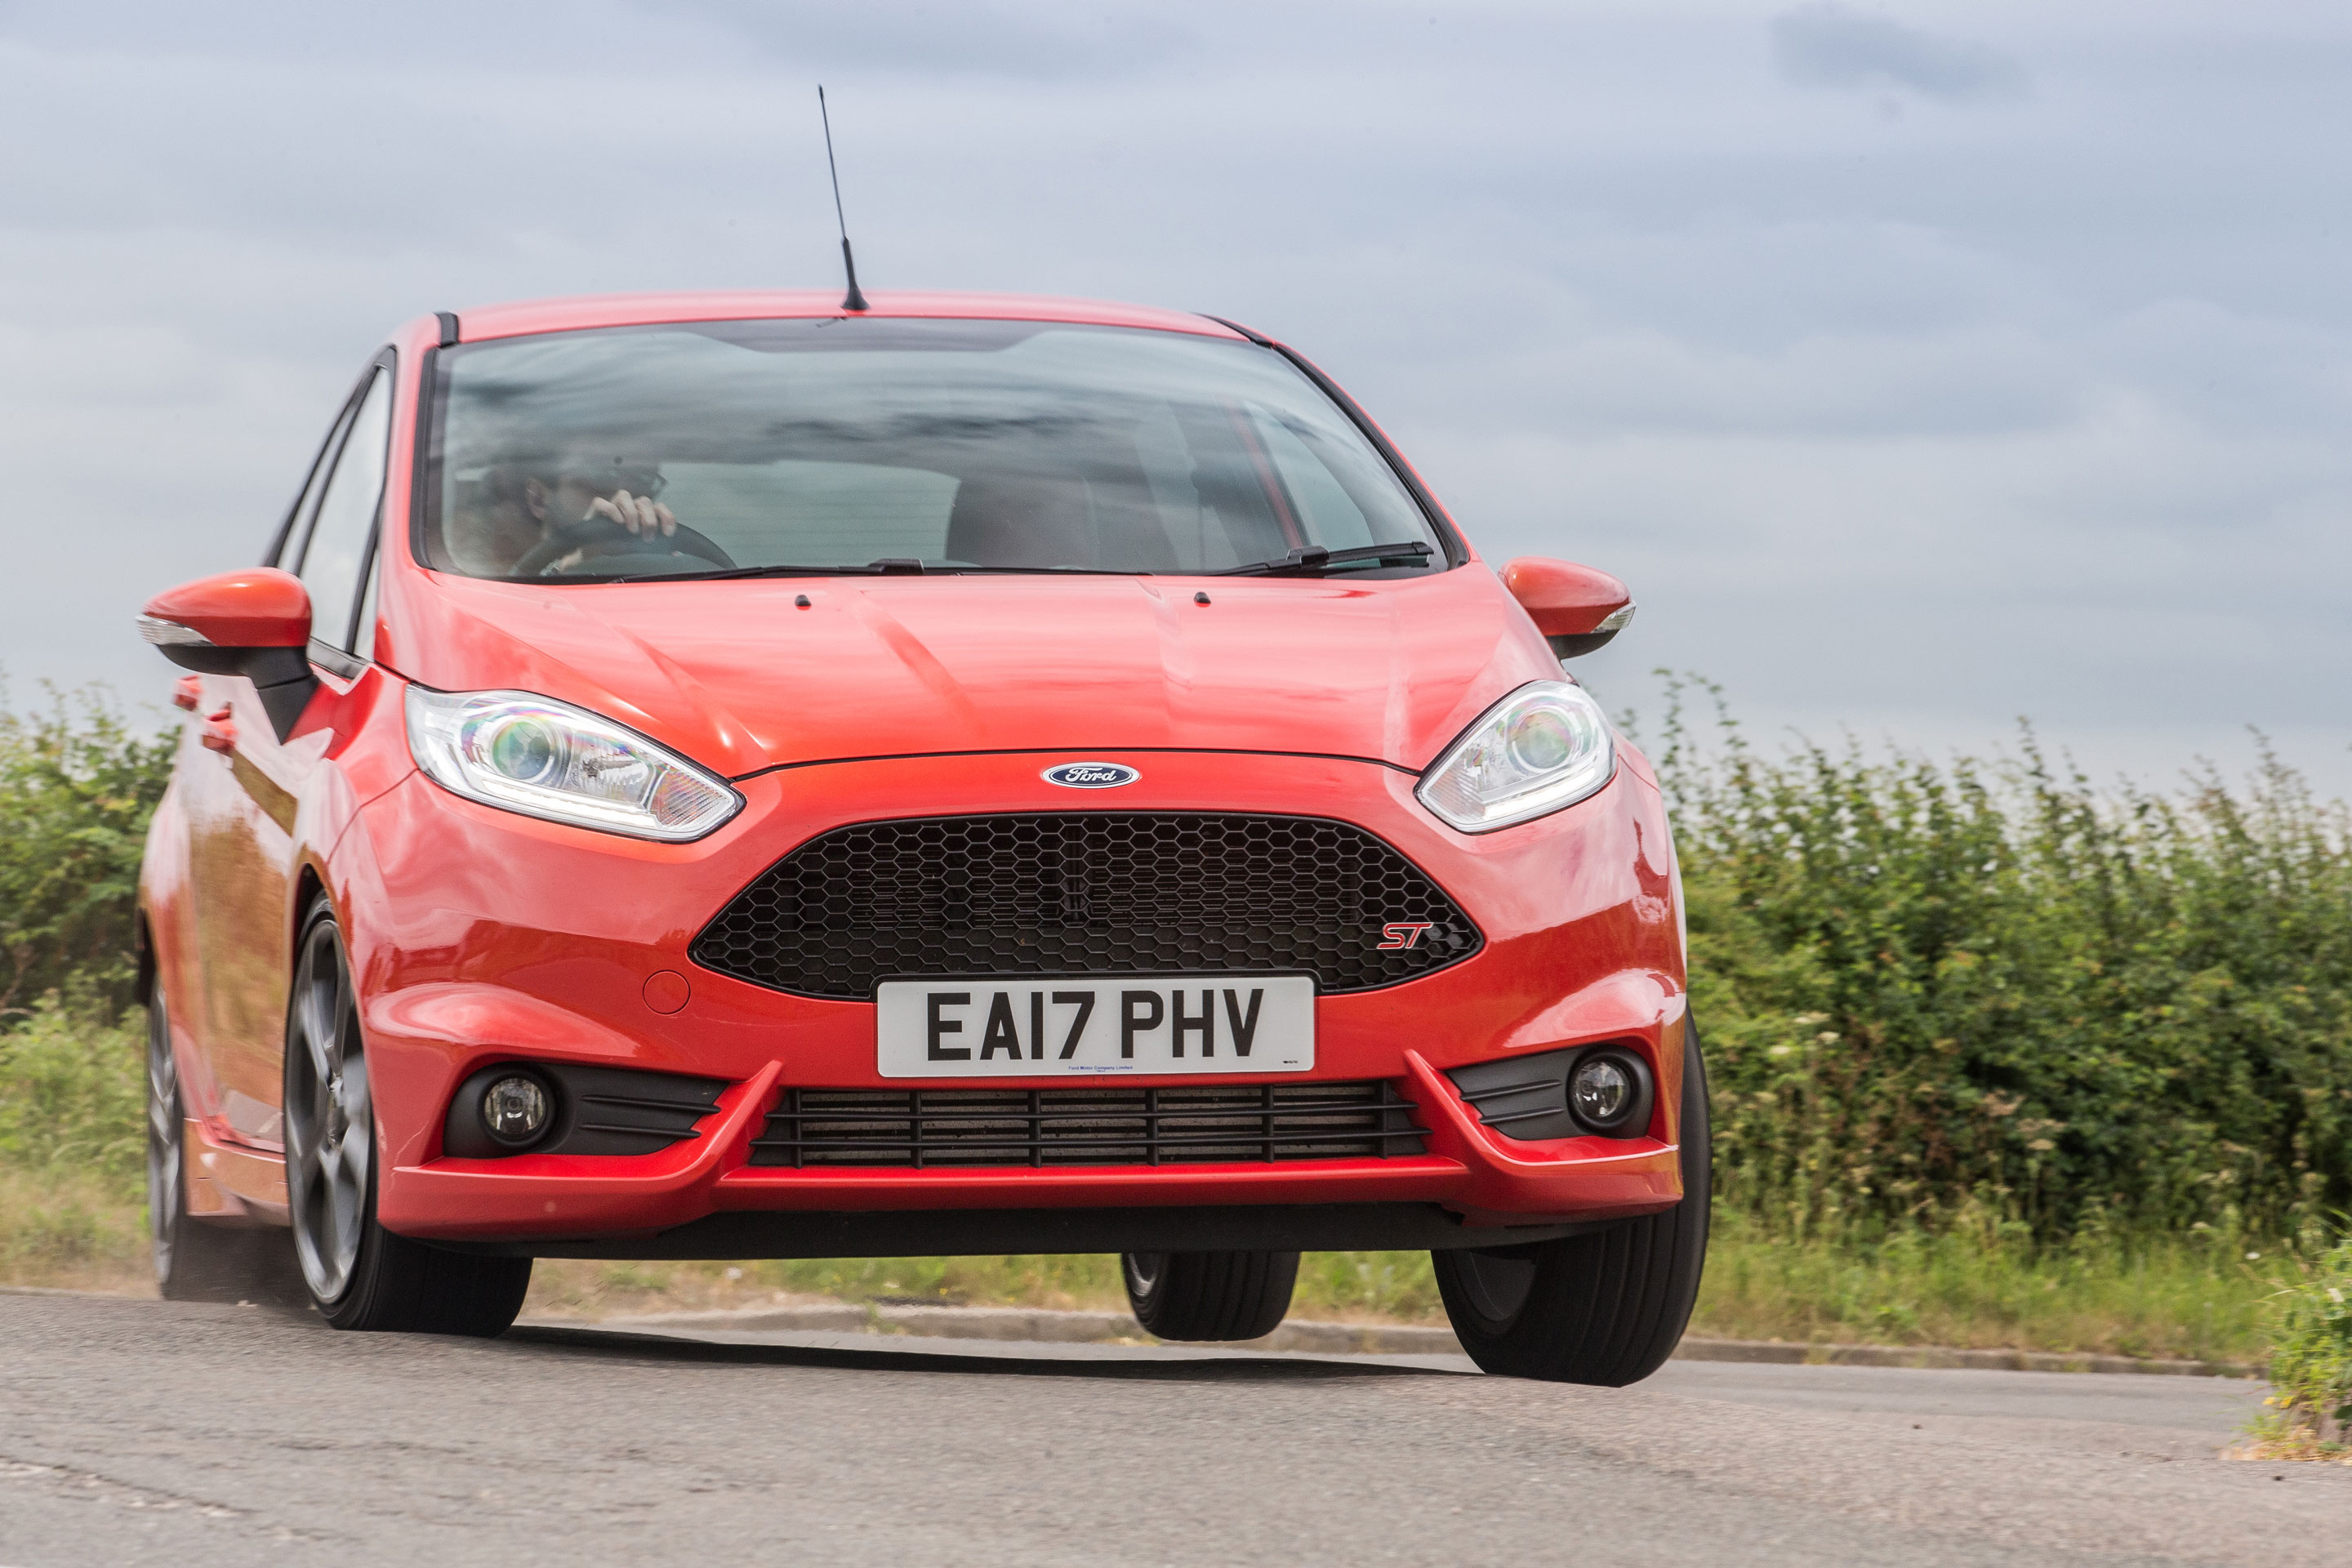 Car Report: 2014 Ford Fiesta is an engaging, low-cost five-door